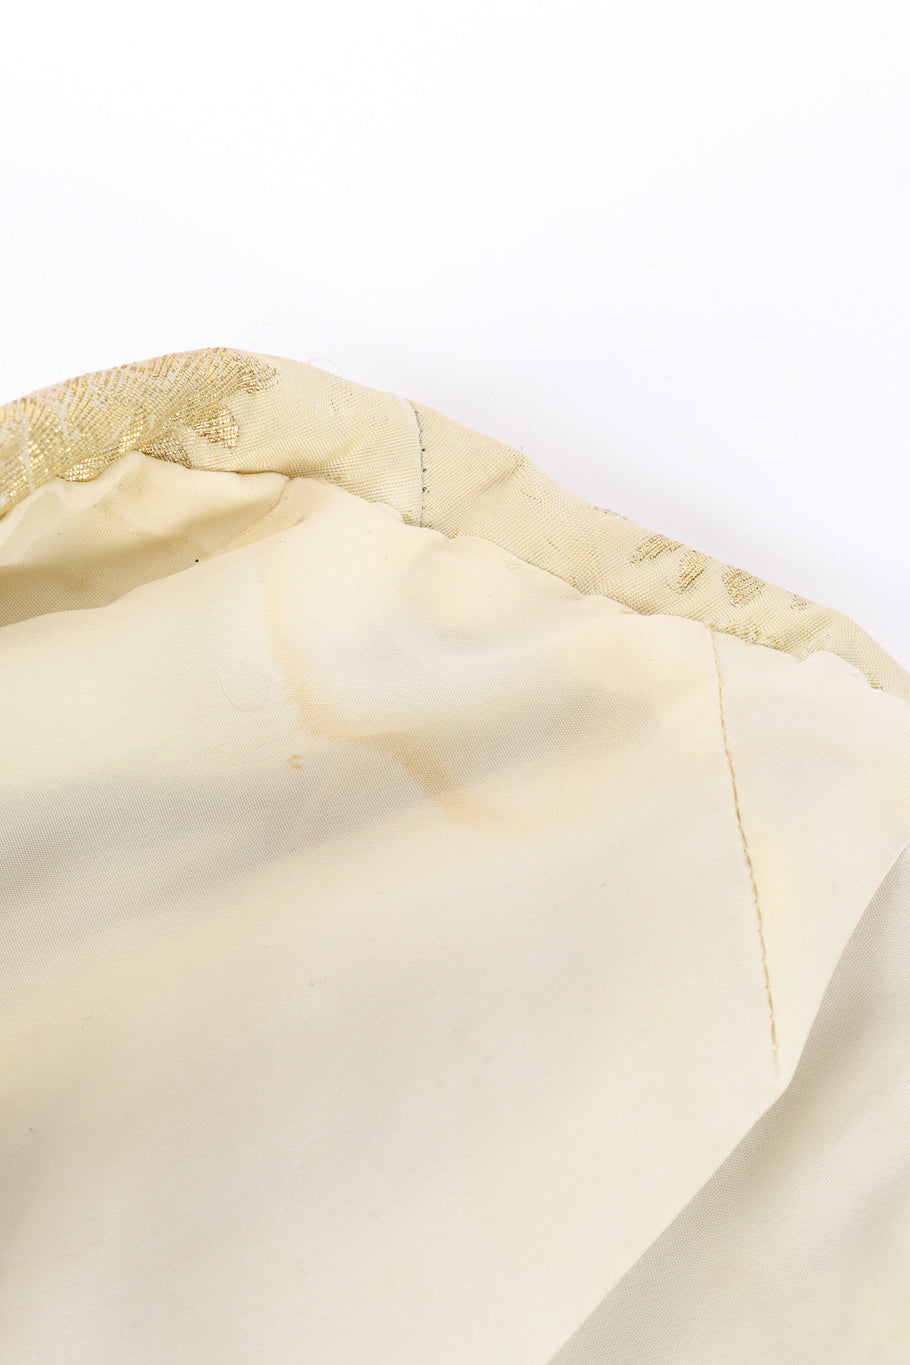 Vintage Bob Mackie Sunburst Strapless Gown stained bust @recessla